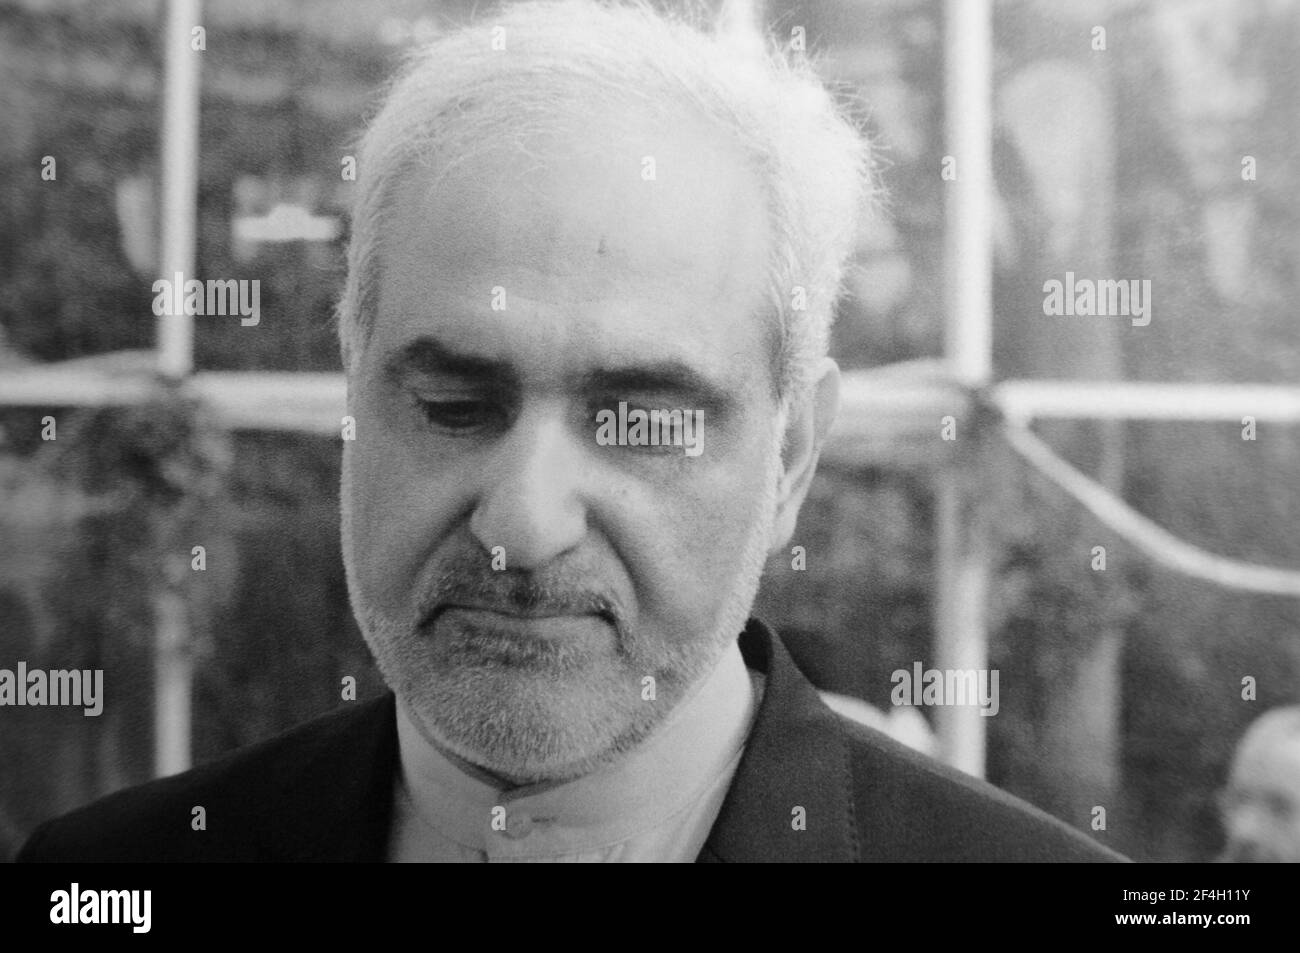 Switzerland: The Iranian embassador in Bern Alireza Salari invited Irans Foreign Minister Mohammed Dschawad Sarif ( محمد جواد ظریف پیرانشهری ) to the Stock Photo